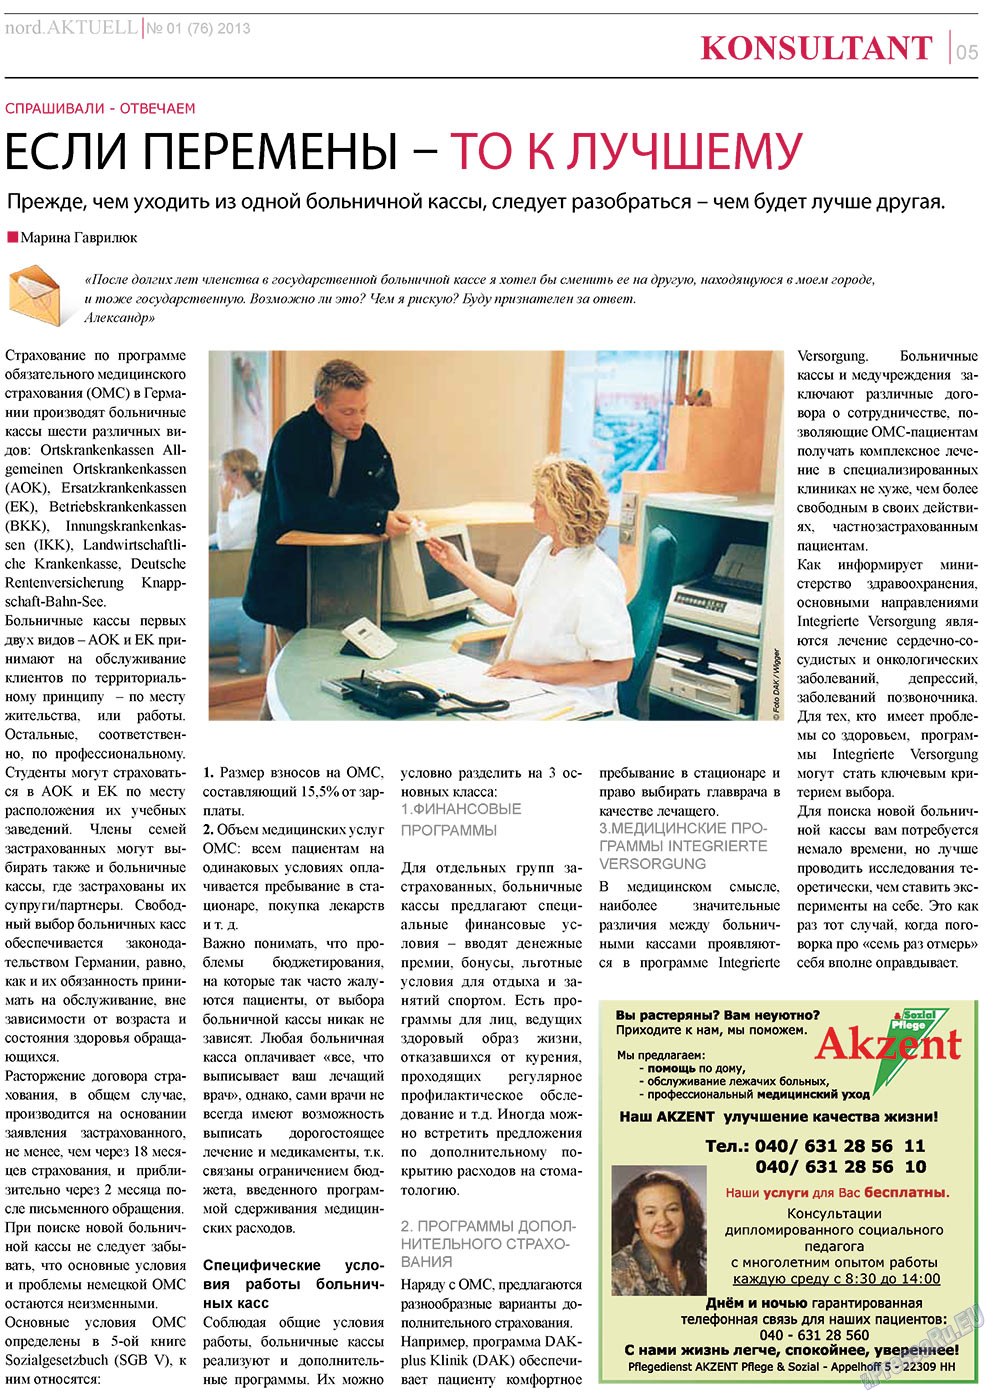 nord.Aktuell, газета. 2013 №1 стр.5